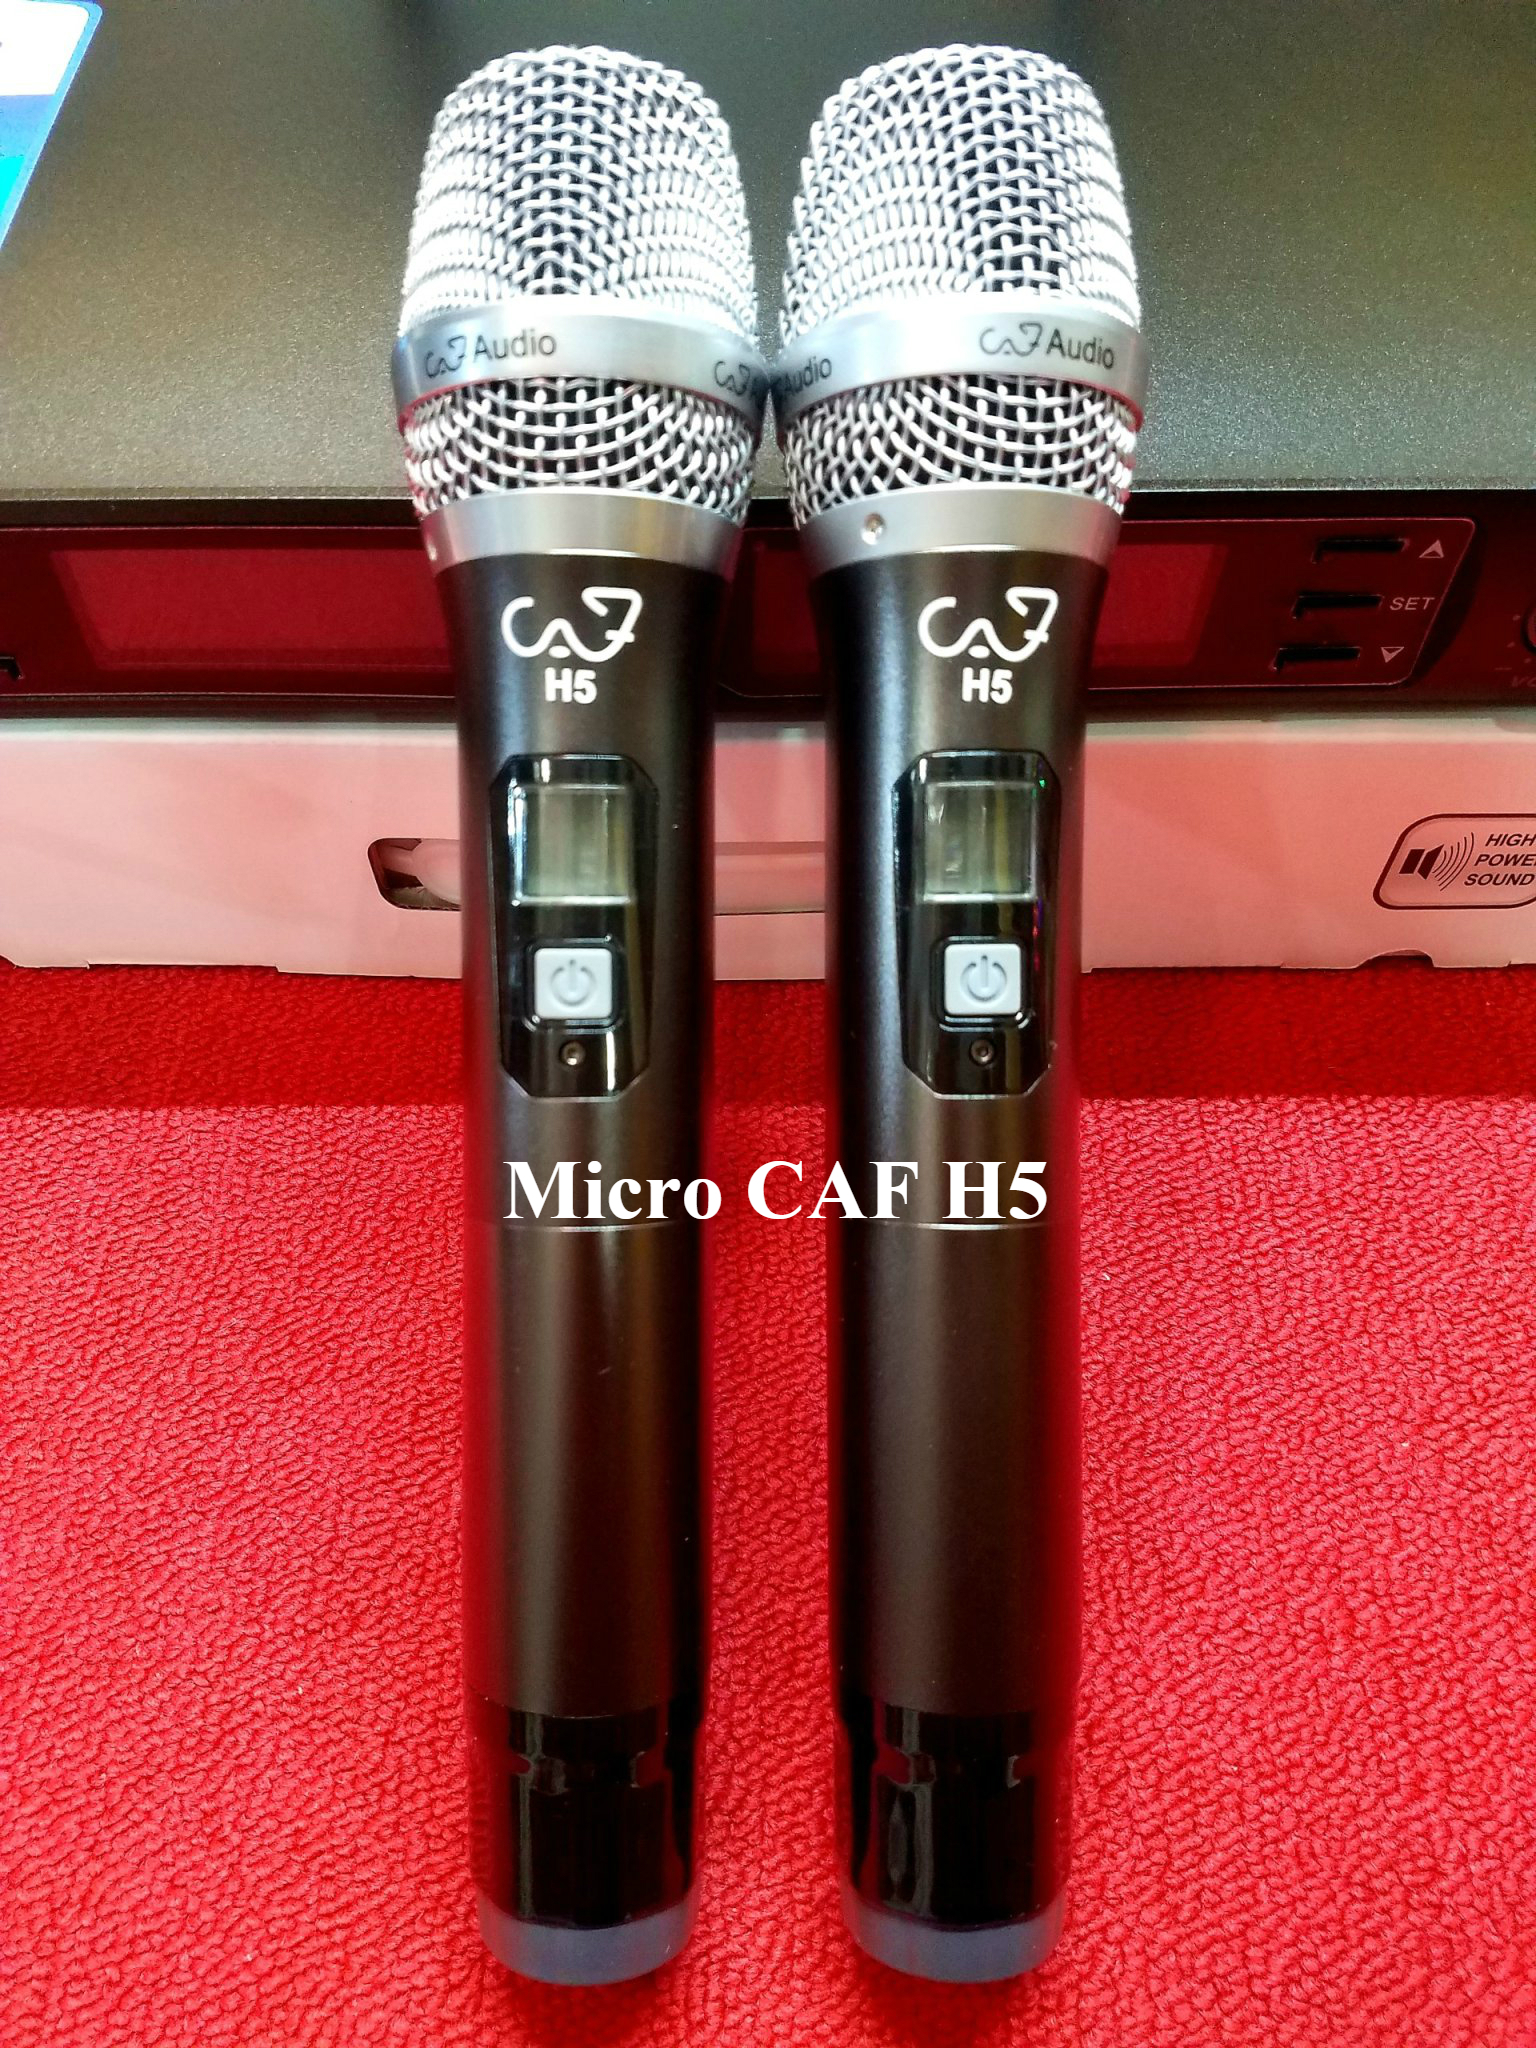 Microphone CAF H5